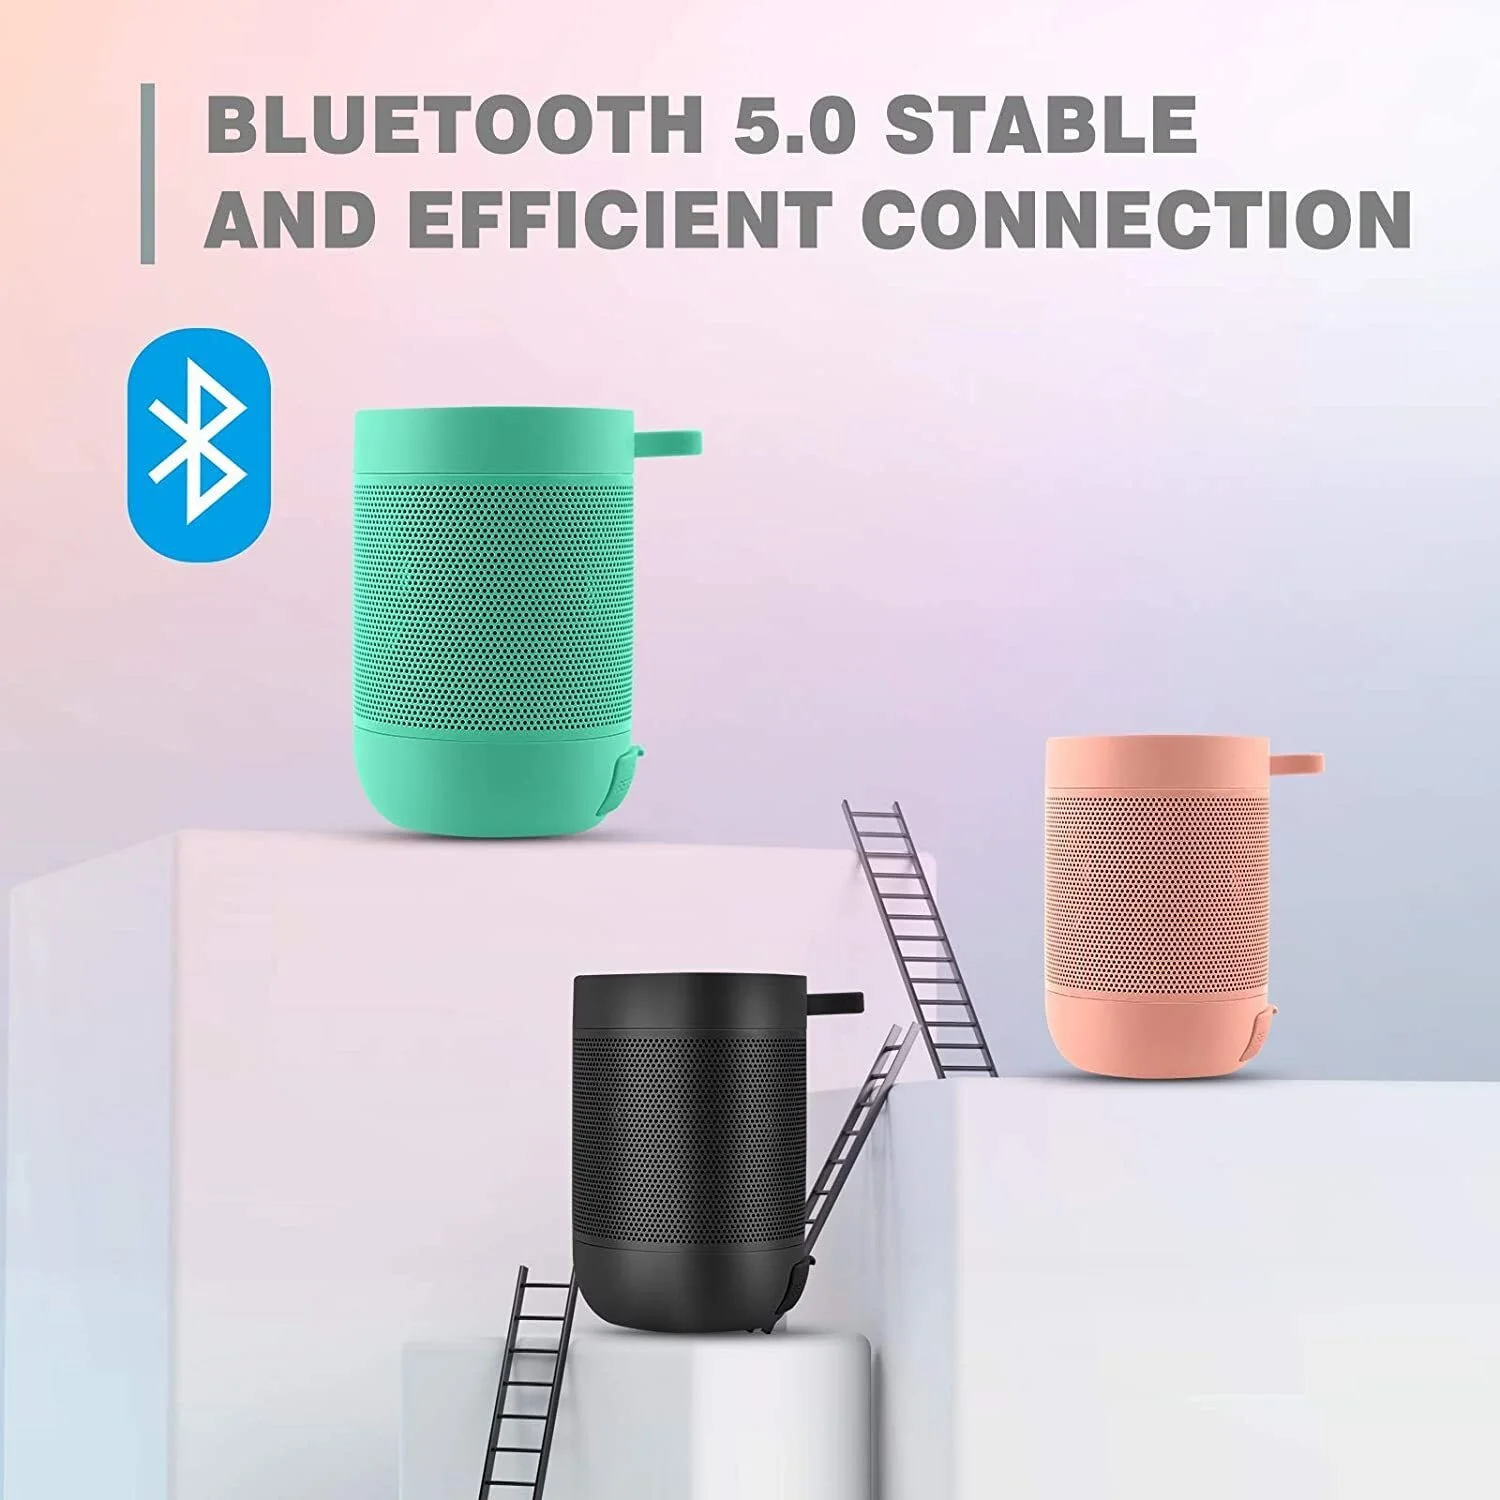 Portable Bluetooth Speaker, COMISO Small Wireless Shower Speaker 360 HD Loud Sound Stereo Pairing Waterproof Mini Pocket Size enlarge